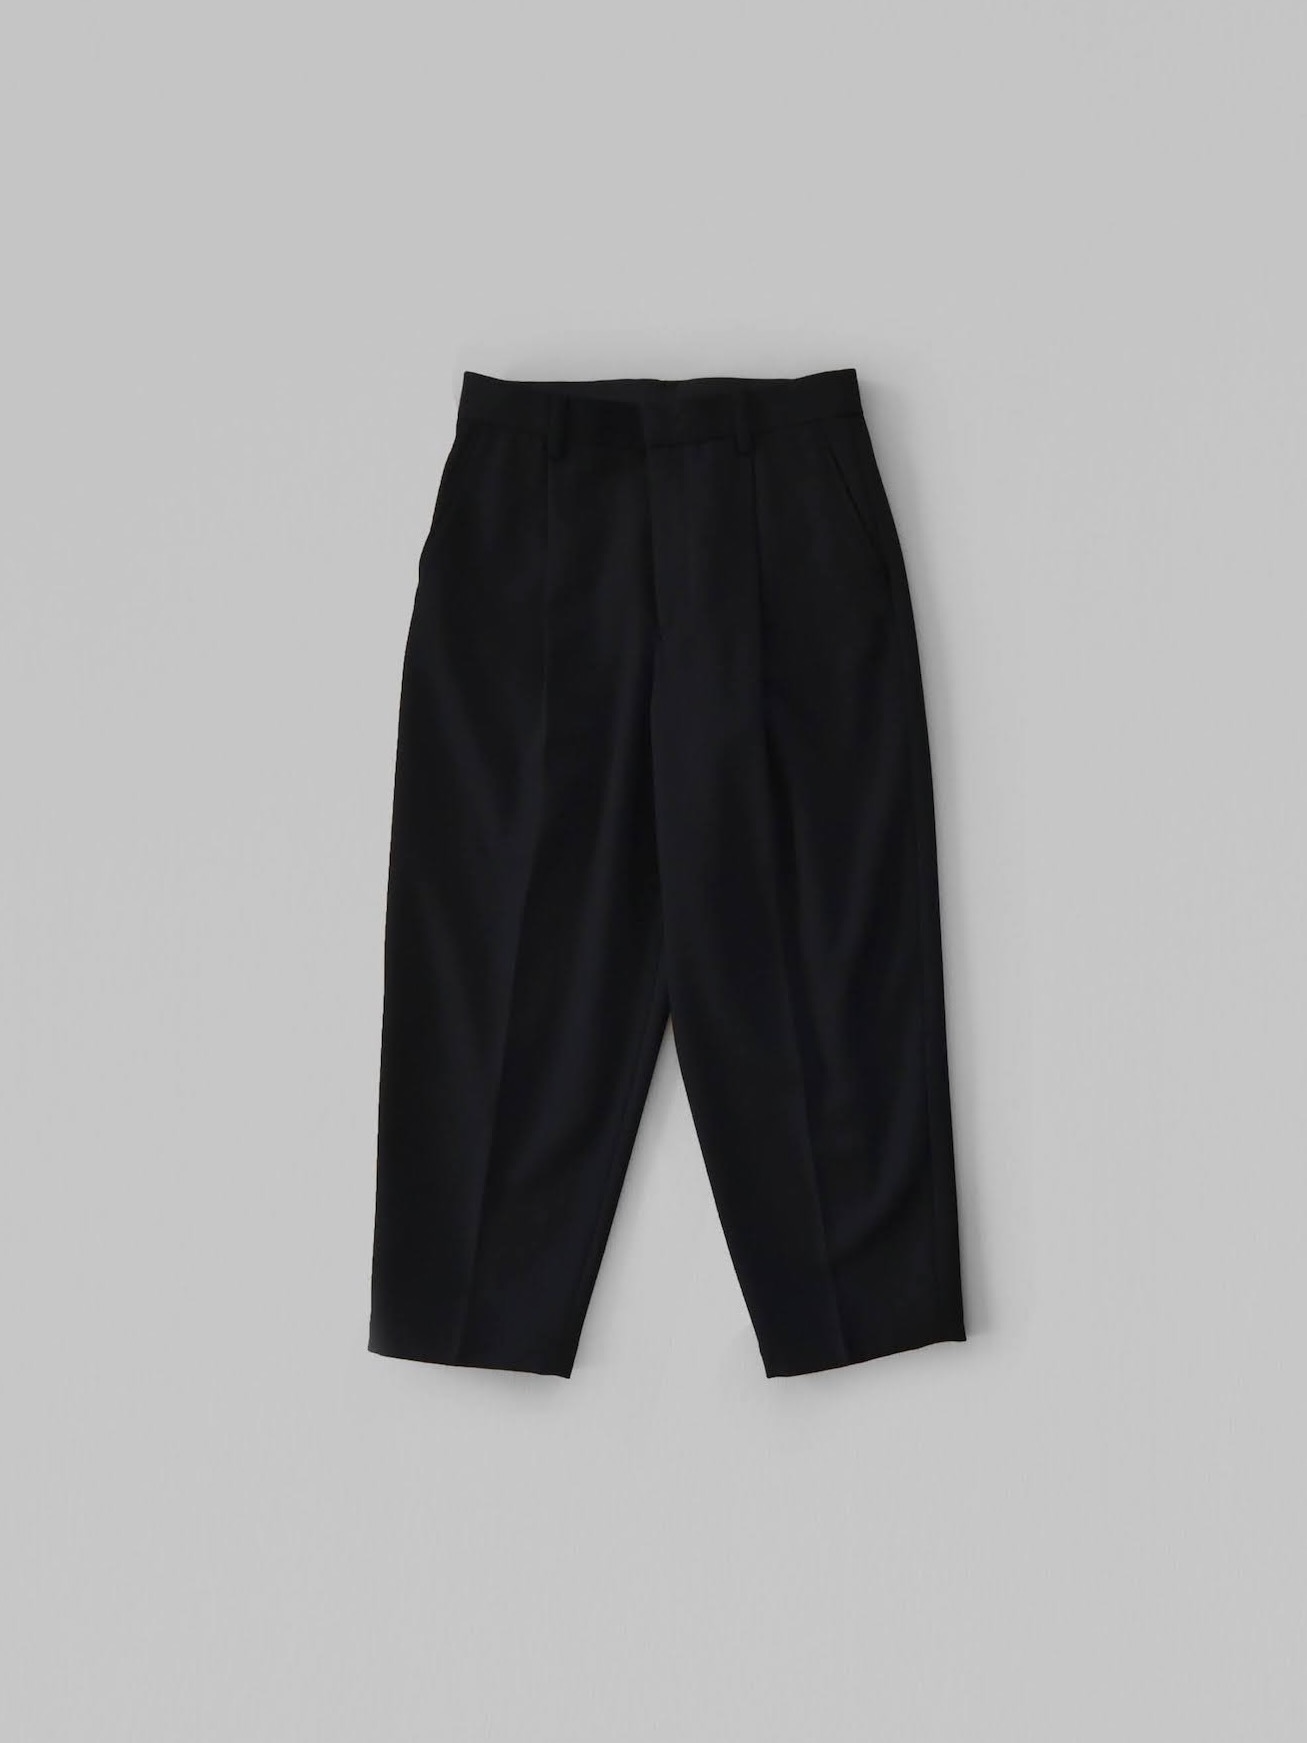 Wool serge cropped slacks　black / pand catalogue